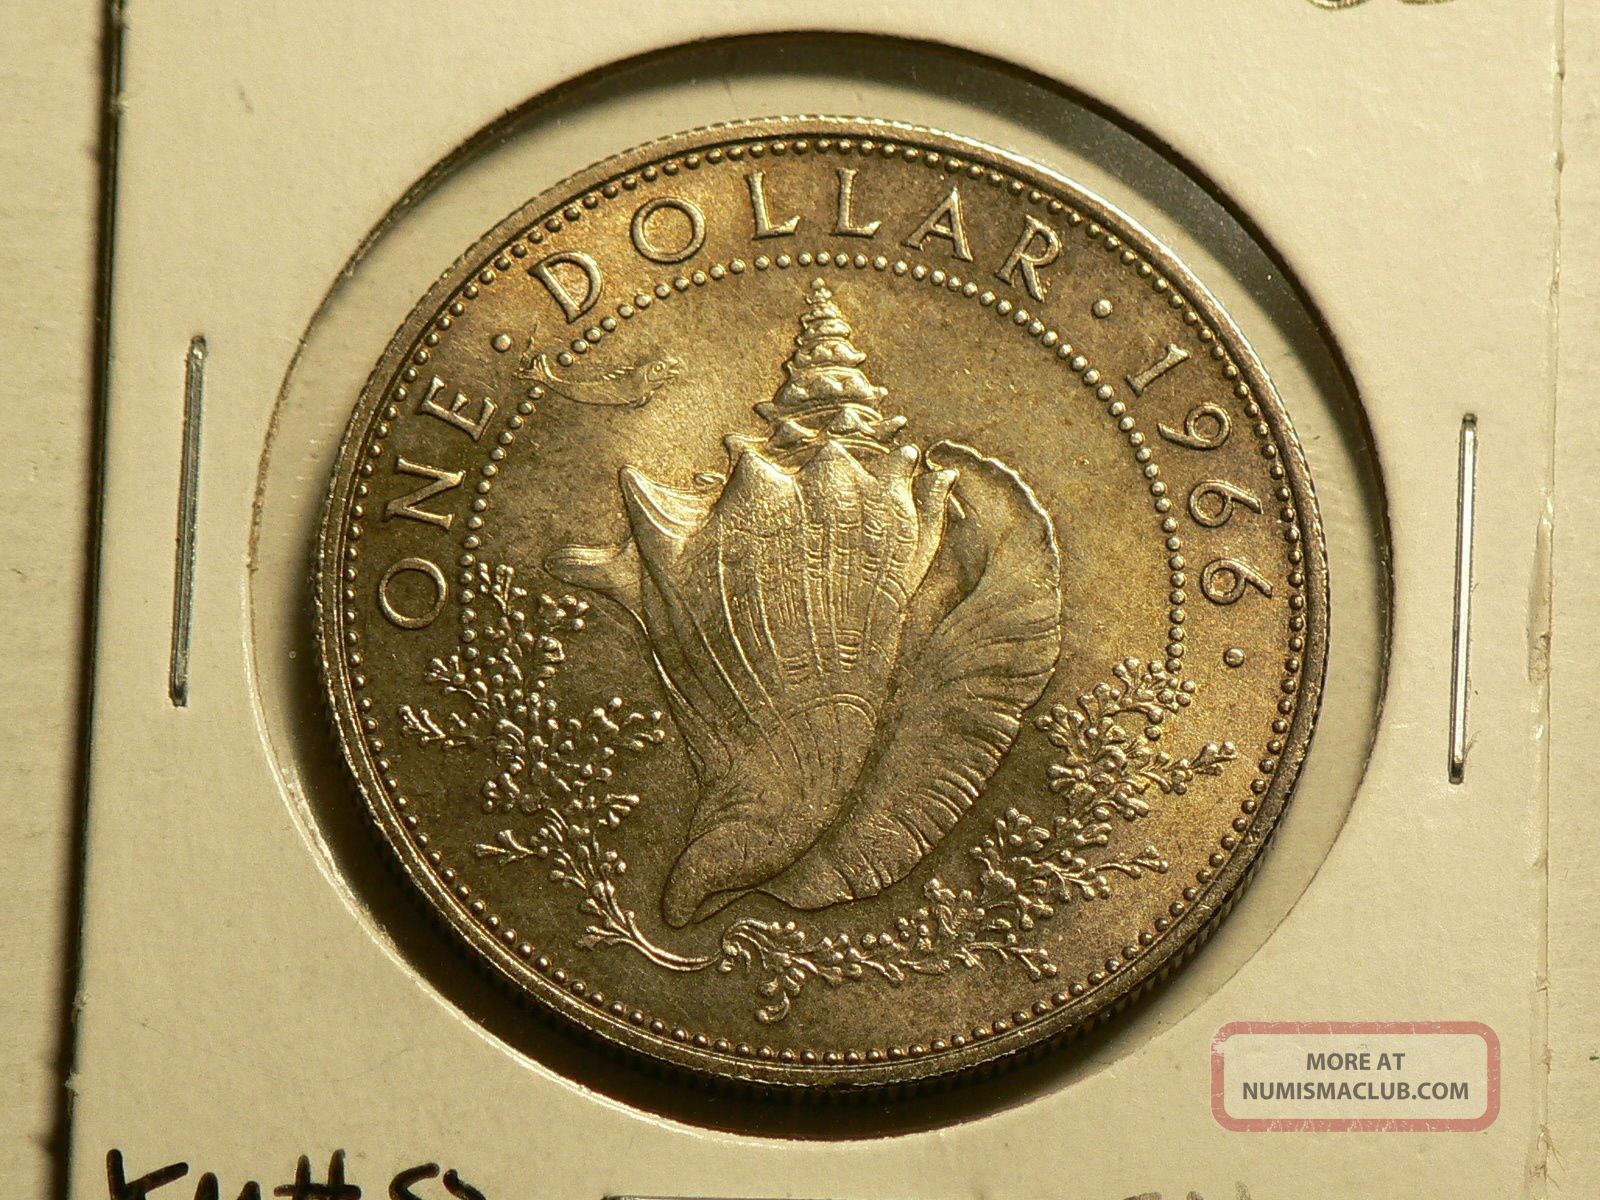 Bahamas, 1966, One Dollar Sea Shell Silver Coin Km 8 17501600 x 1200